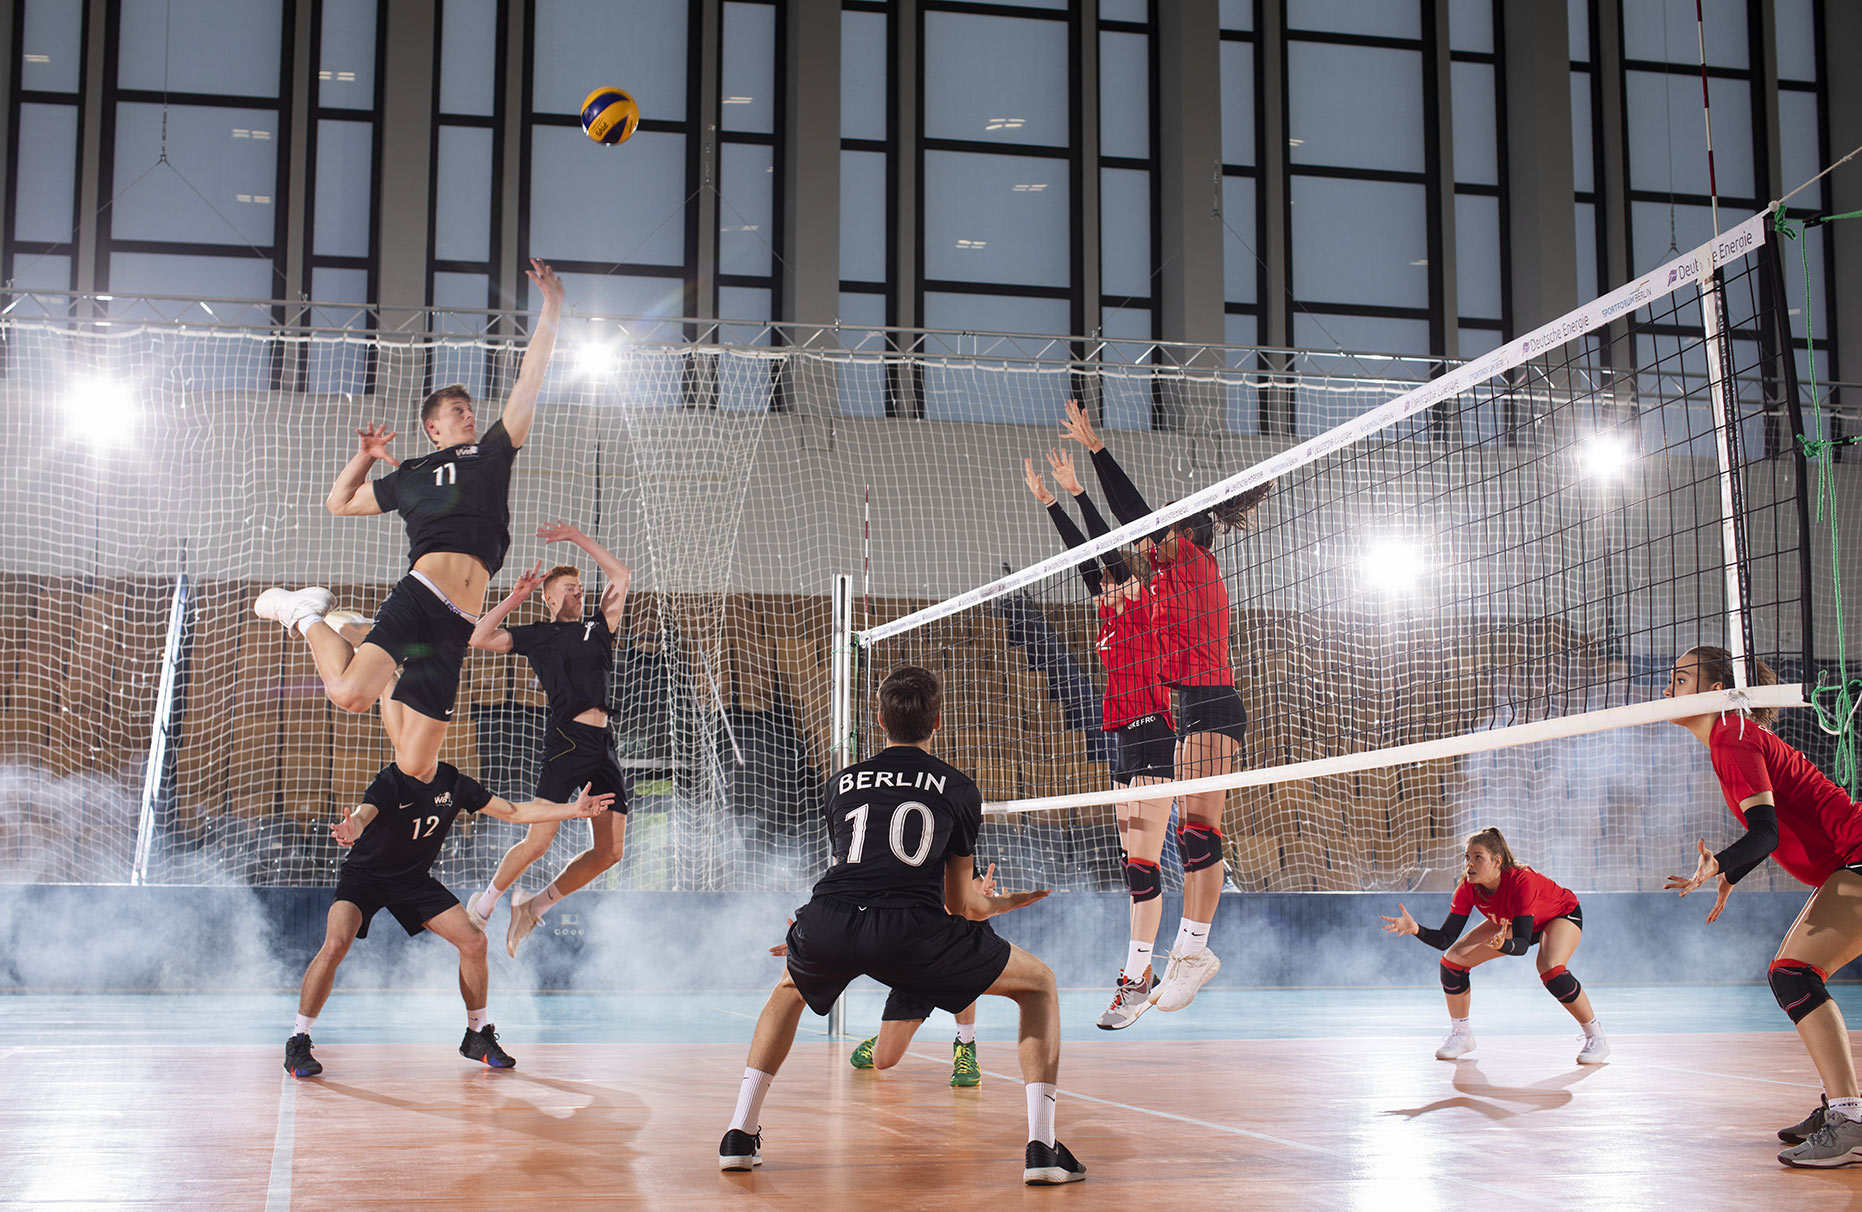 © Dirk Mathesius, volleyball U18, free work, Berlin